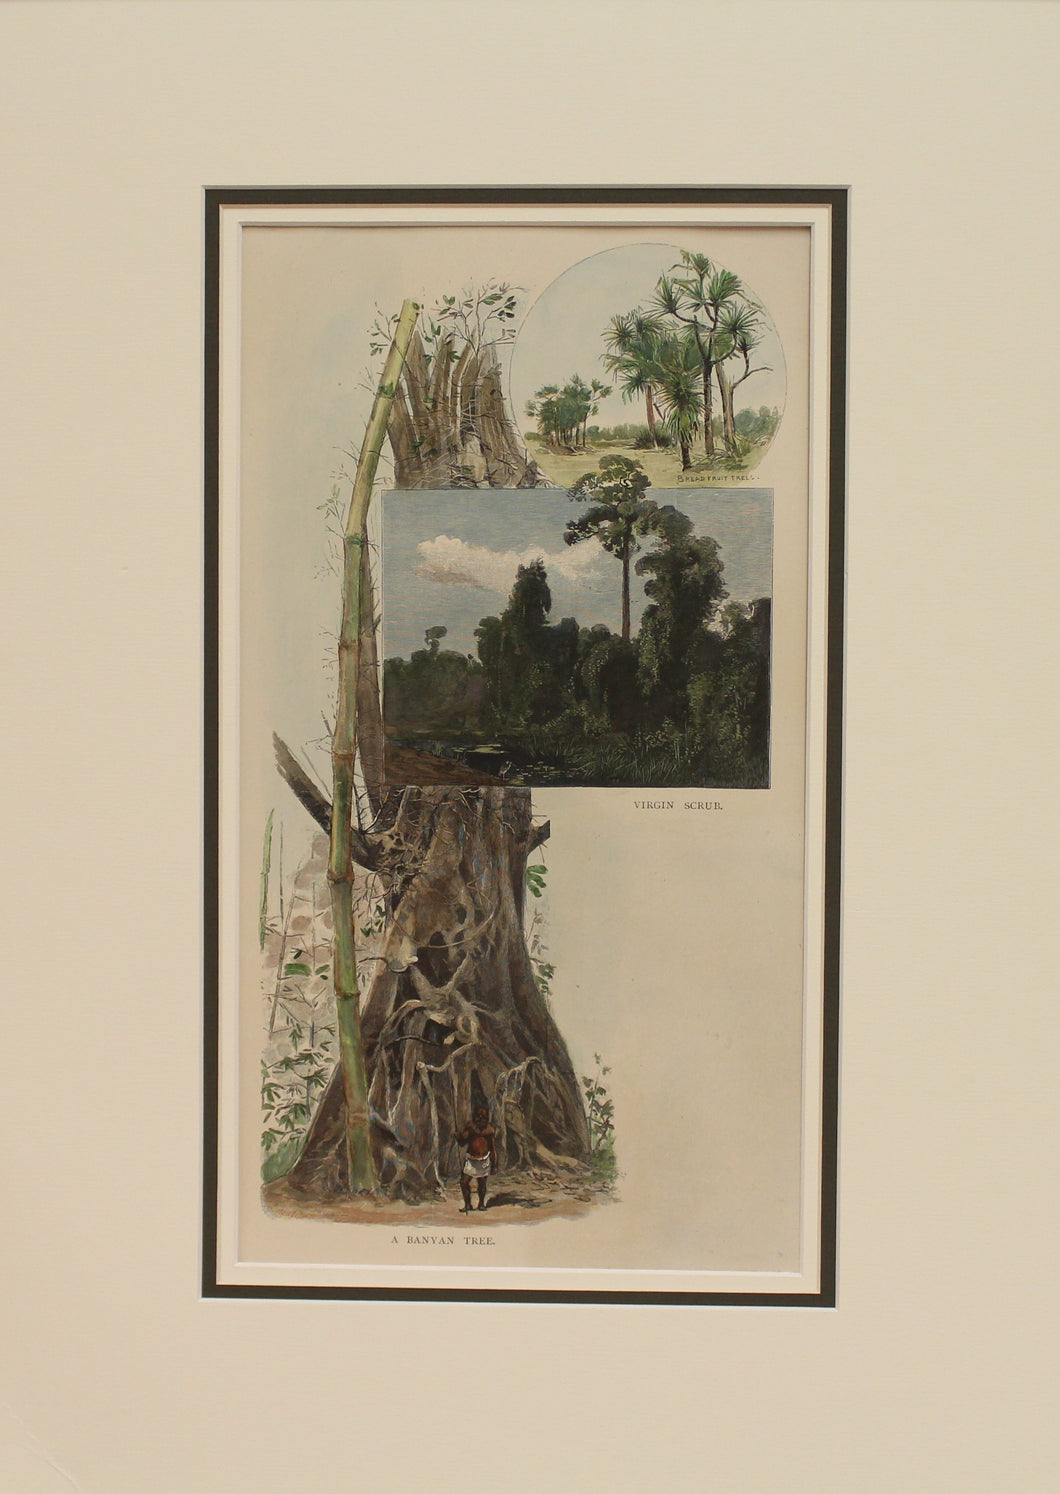 Australia, A Banyan Tree, Breadfruit Trees and Virgin Scrub, c1886